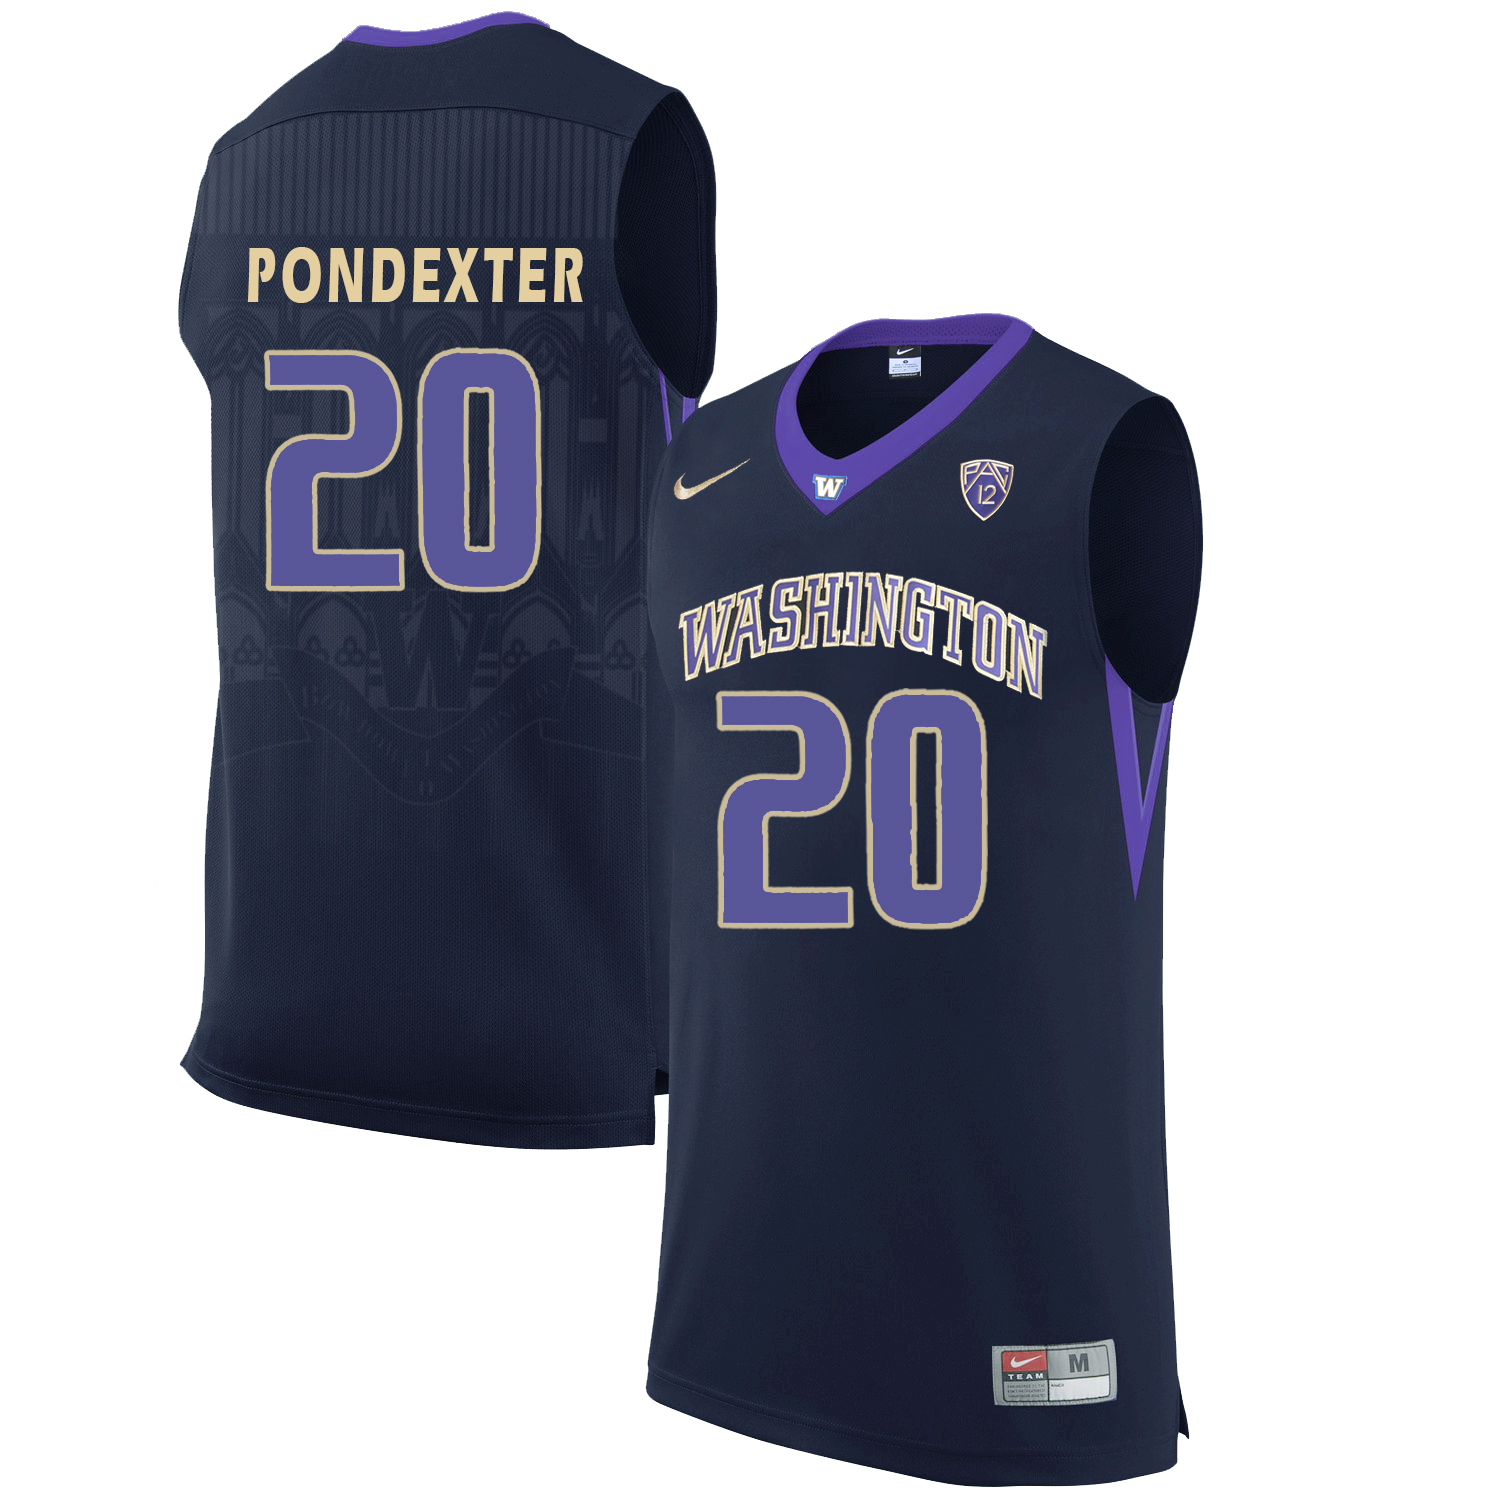 Washington Huskies 20 Quincy Pondexter Black College Basketball Jersey